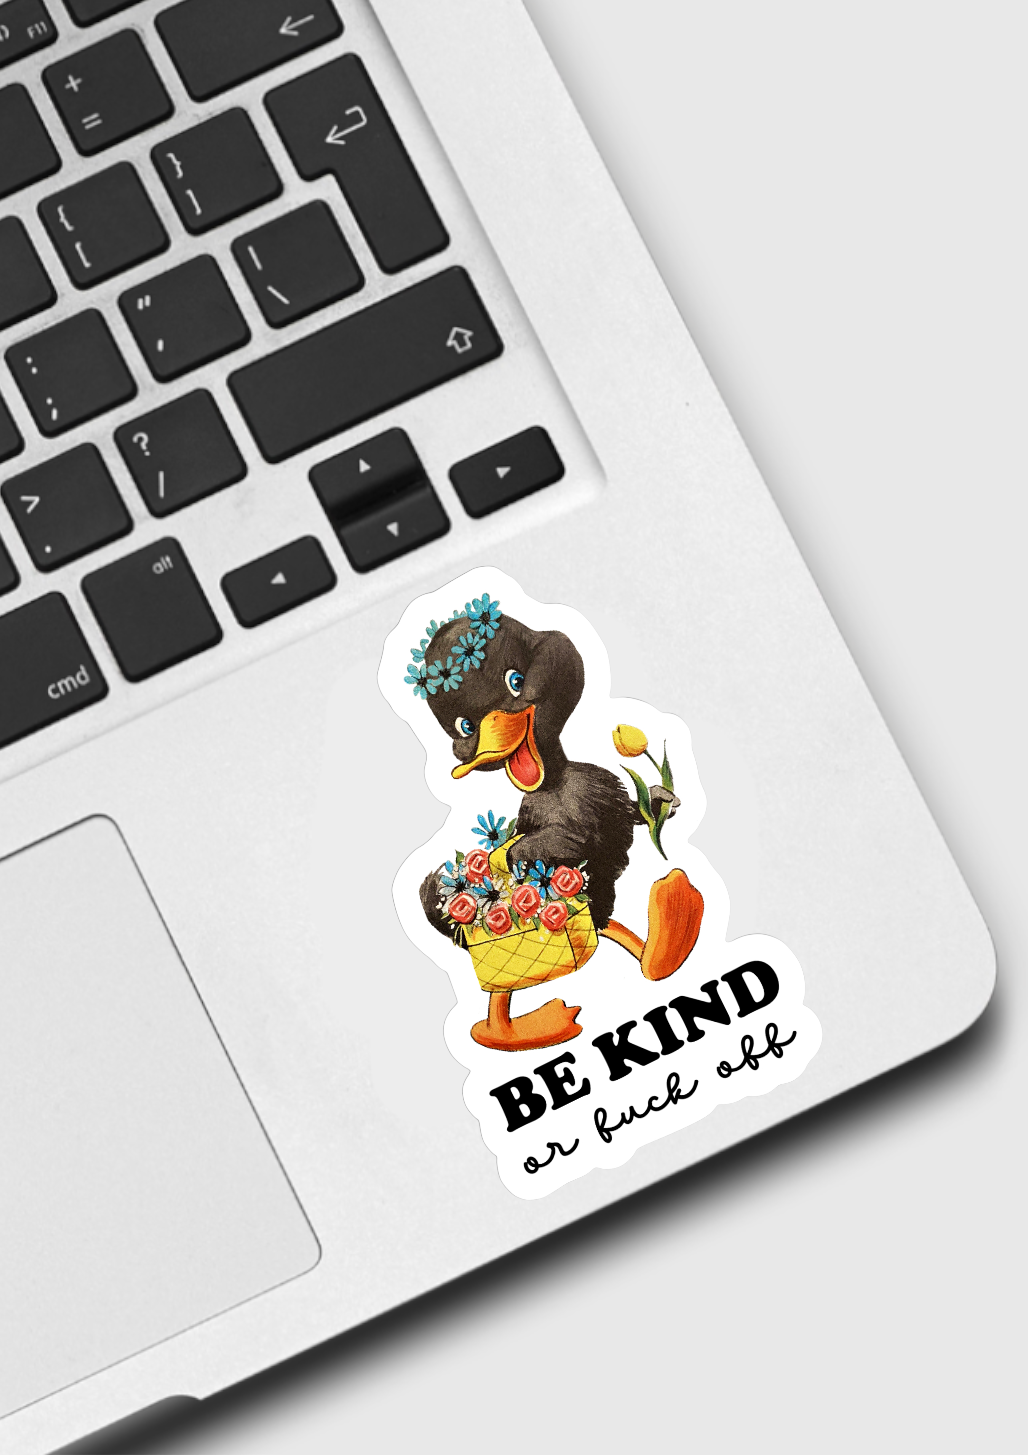 Sticker-Social-19: Be Kind or F*ck Off